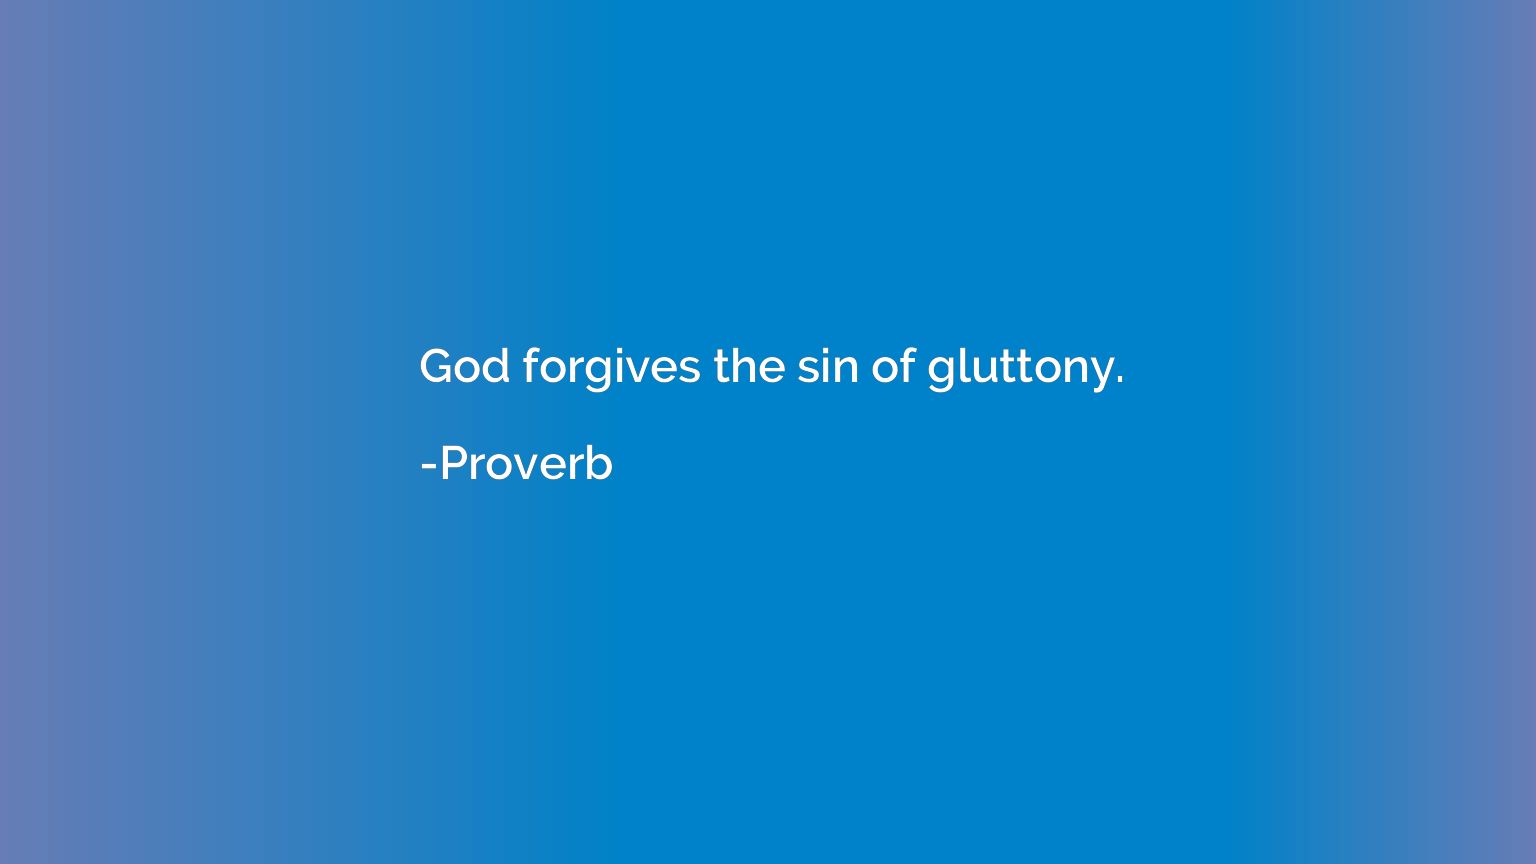 God forgives the sin of gluttony.